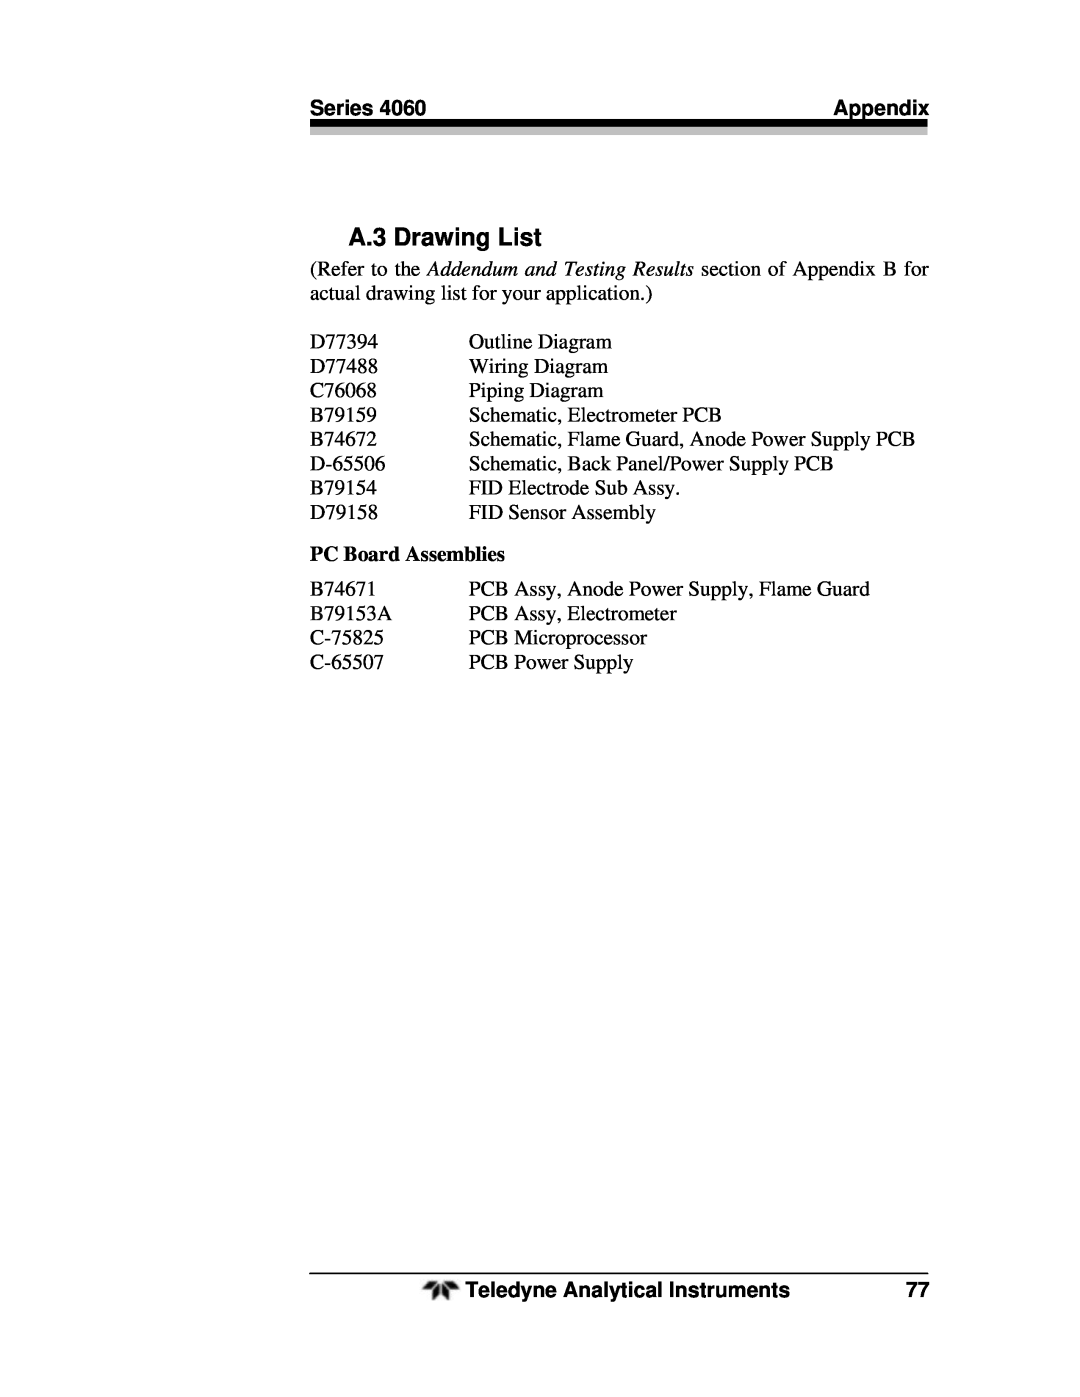 Teledyne 4060 manual A.3 Drawing List, PC Board Assemblies 